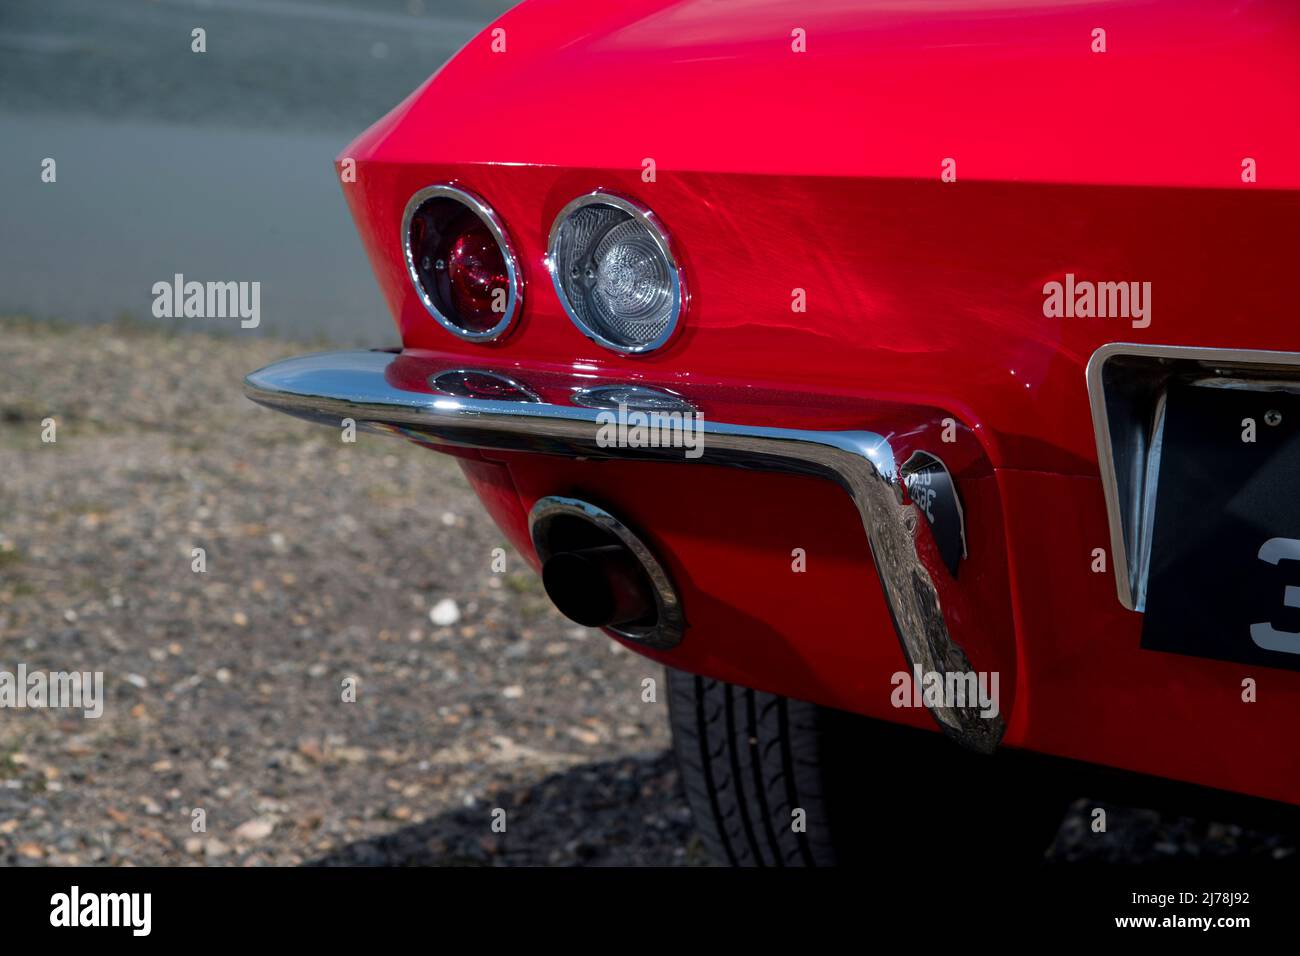 1966 Chevrolet Corvette  Stingray C2 second generation classic American sports car Stock Photo